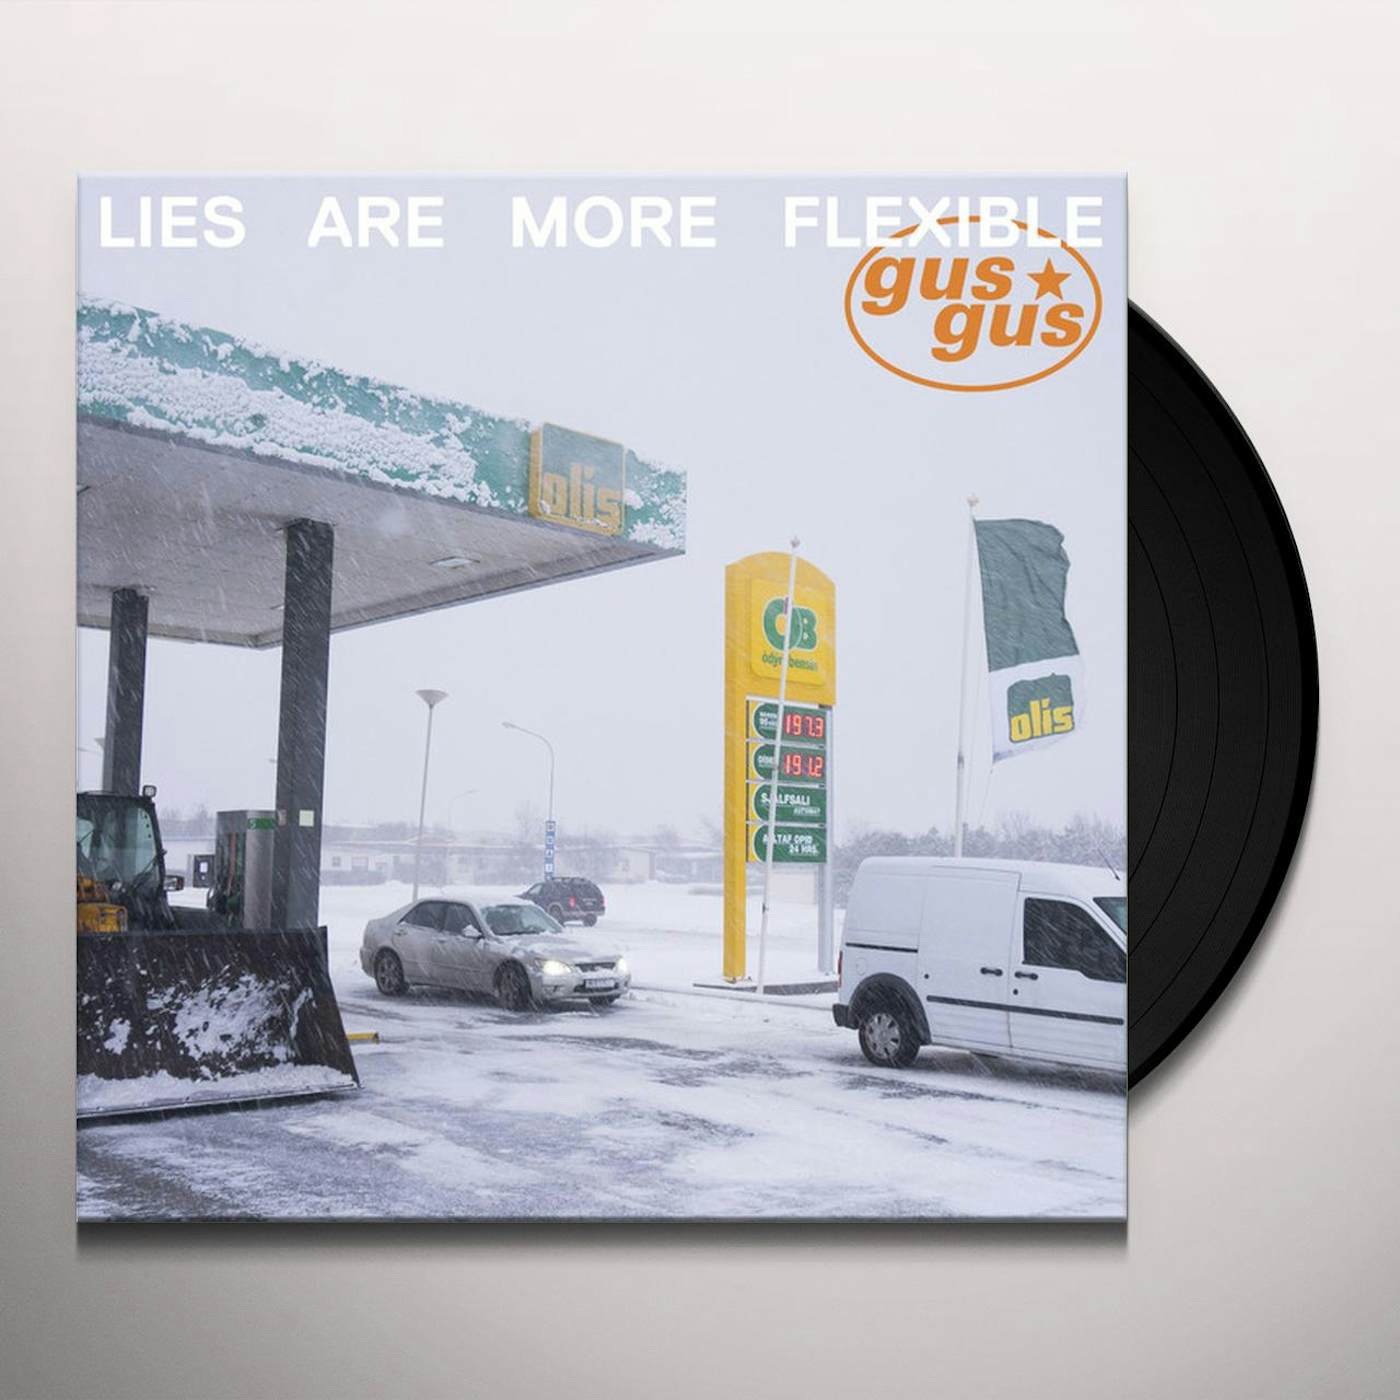 GusGus REMIXES ARE MORE FLEXIBLE Vinyl Record